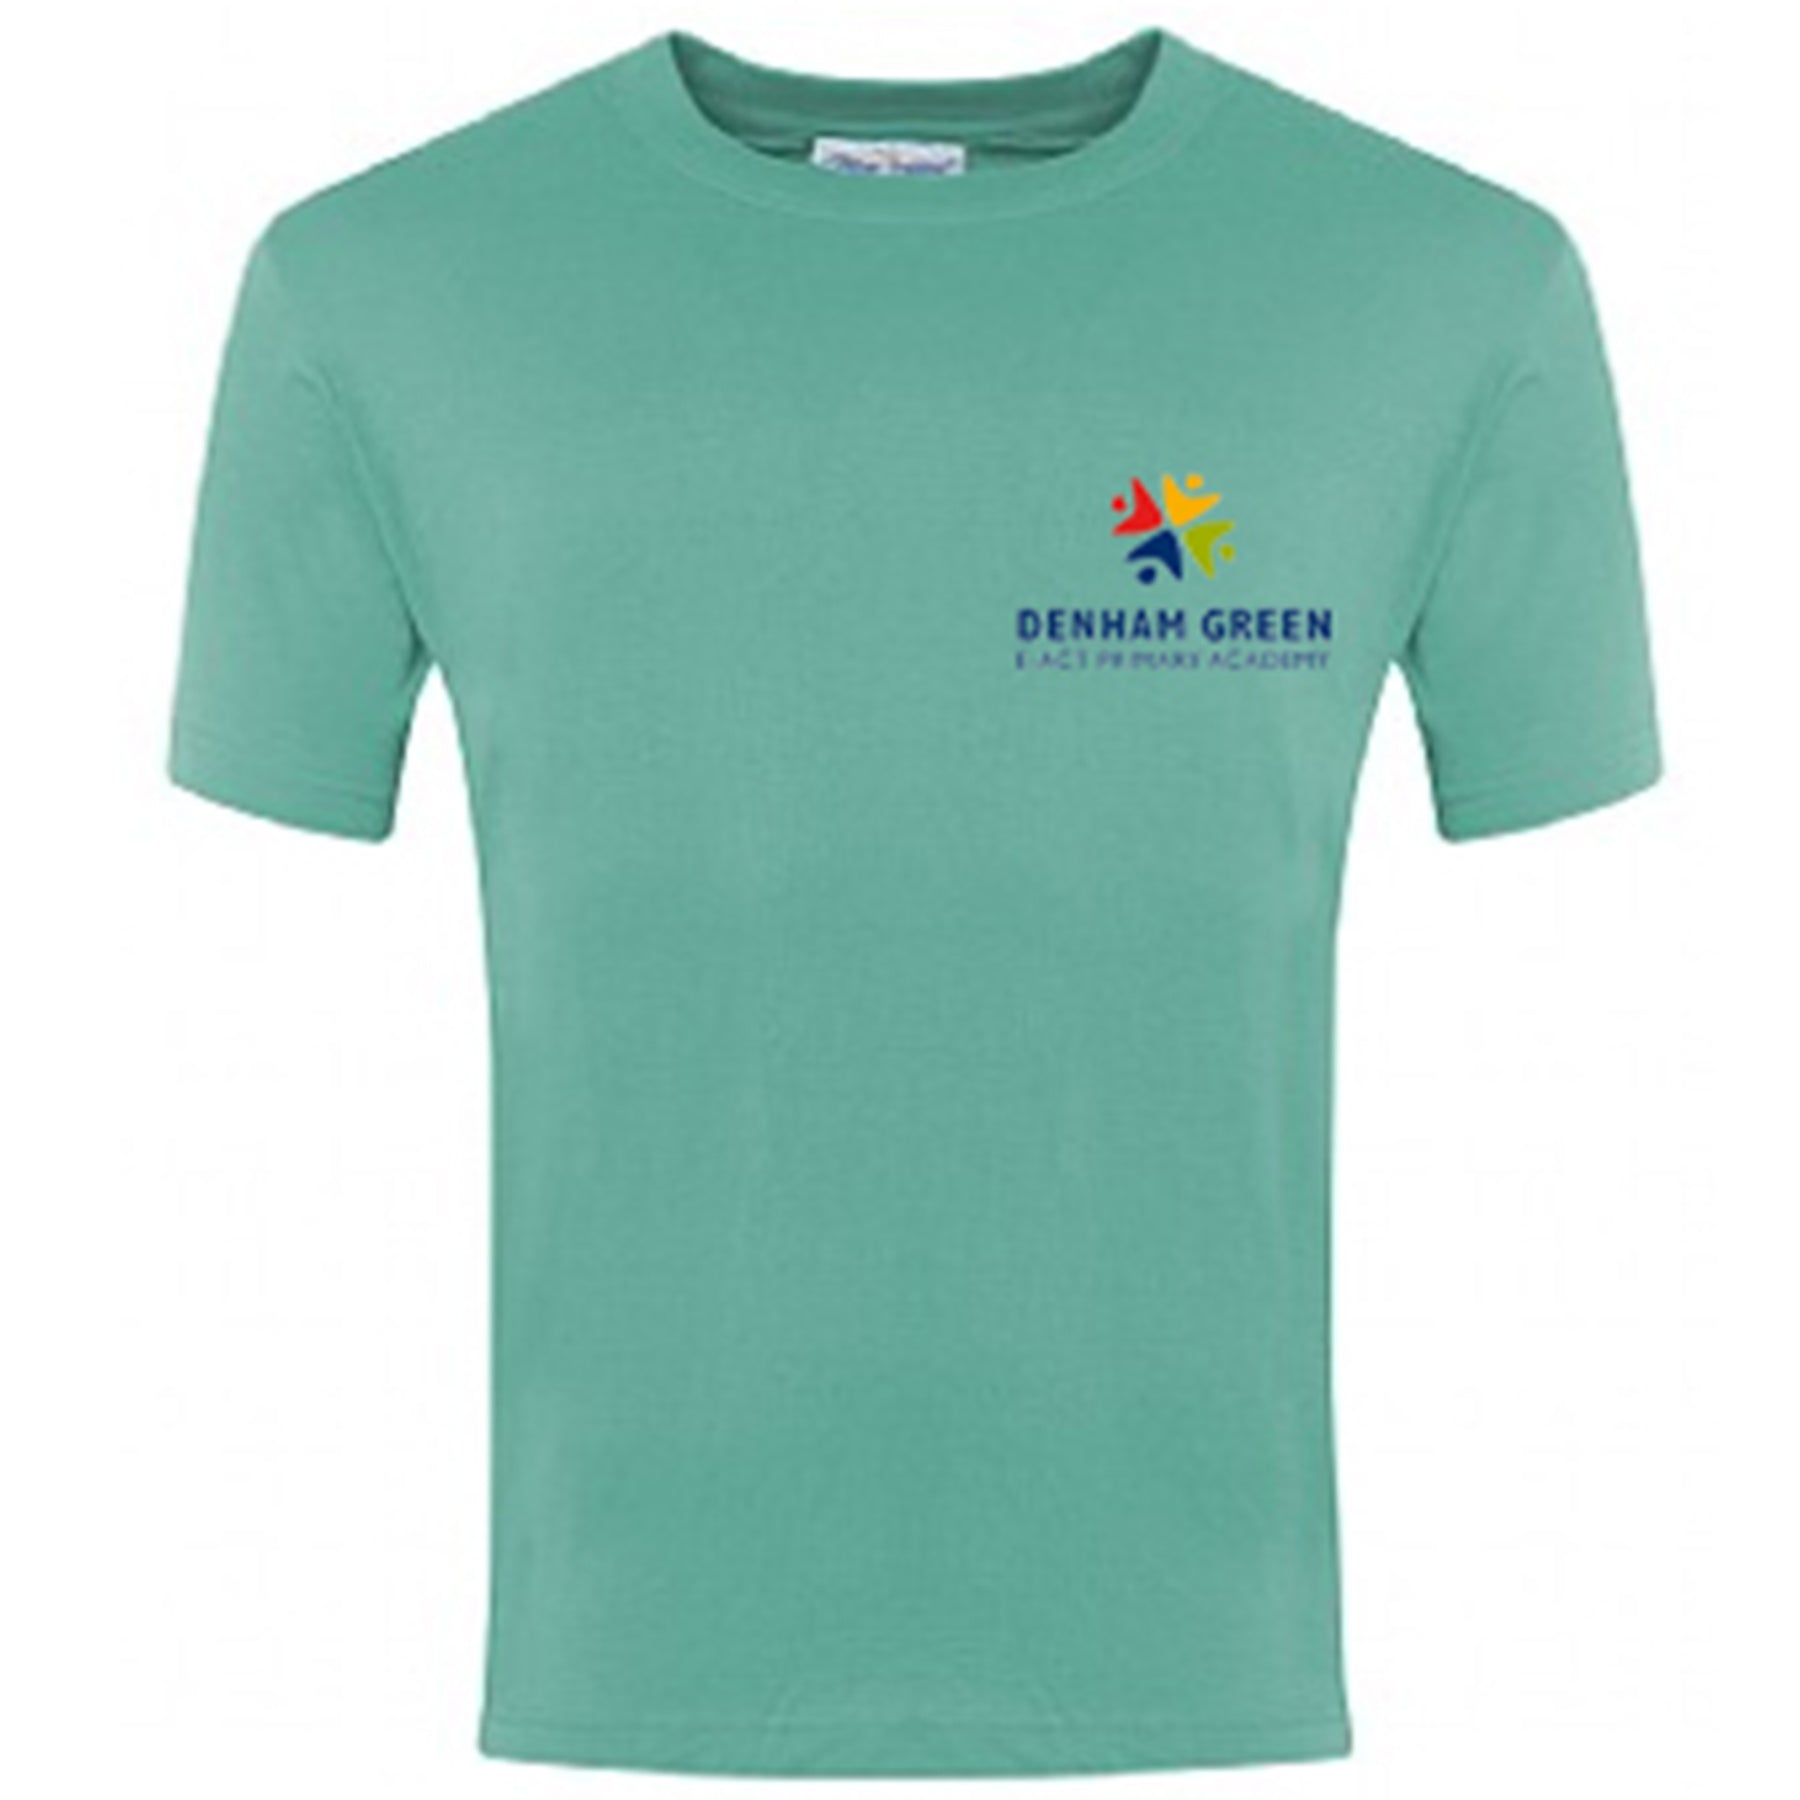 Denham Green School T Shirt